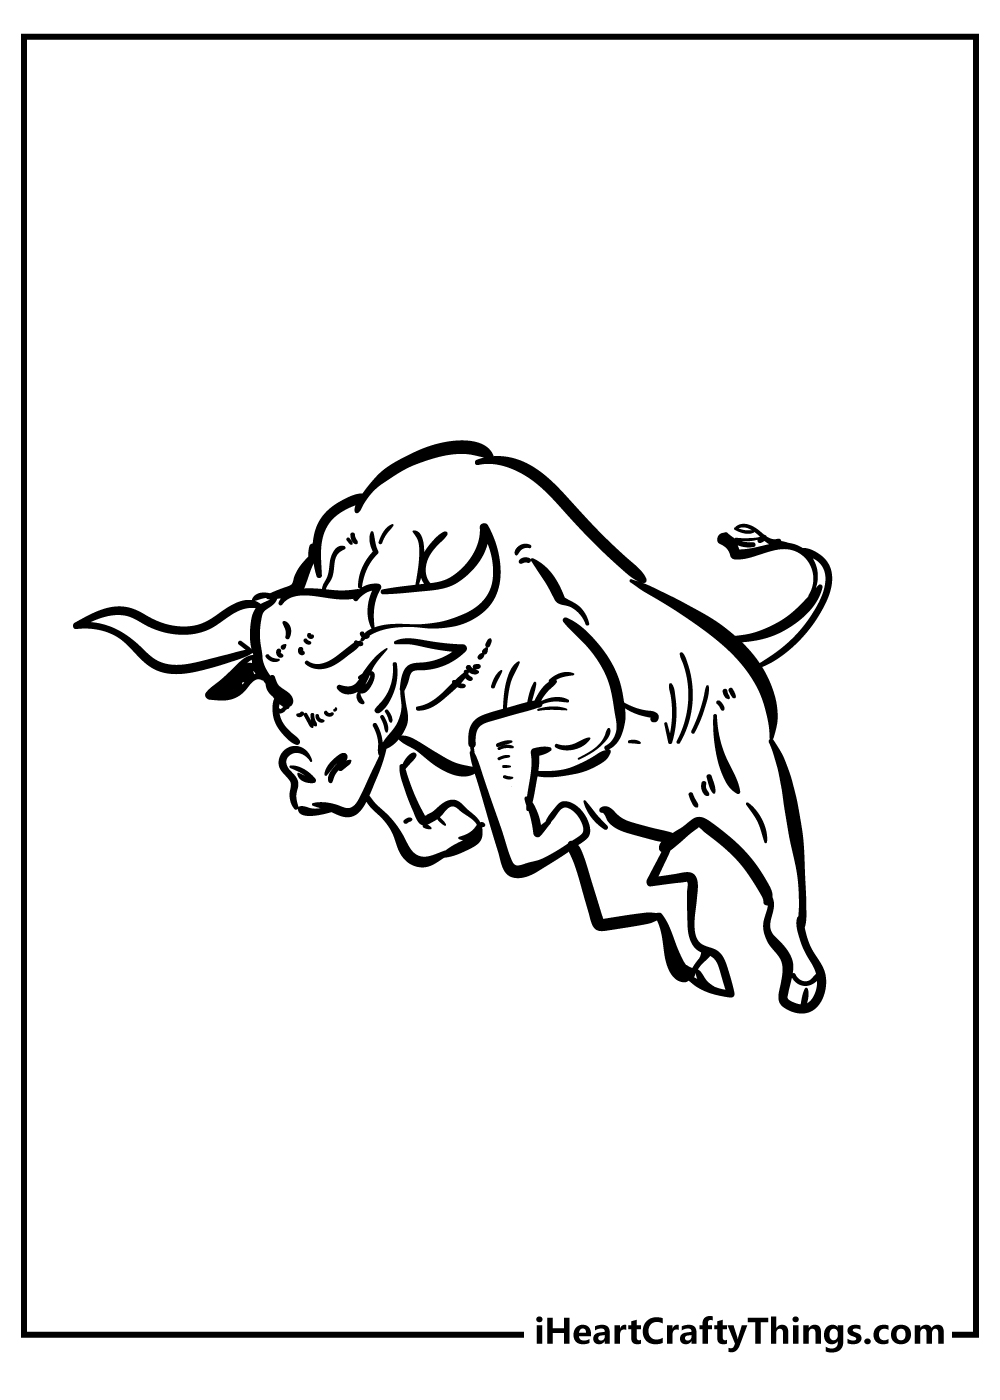 Bull Coloring Original Sheet for children free download